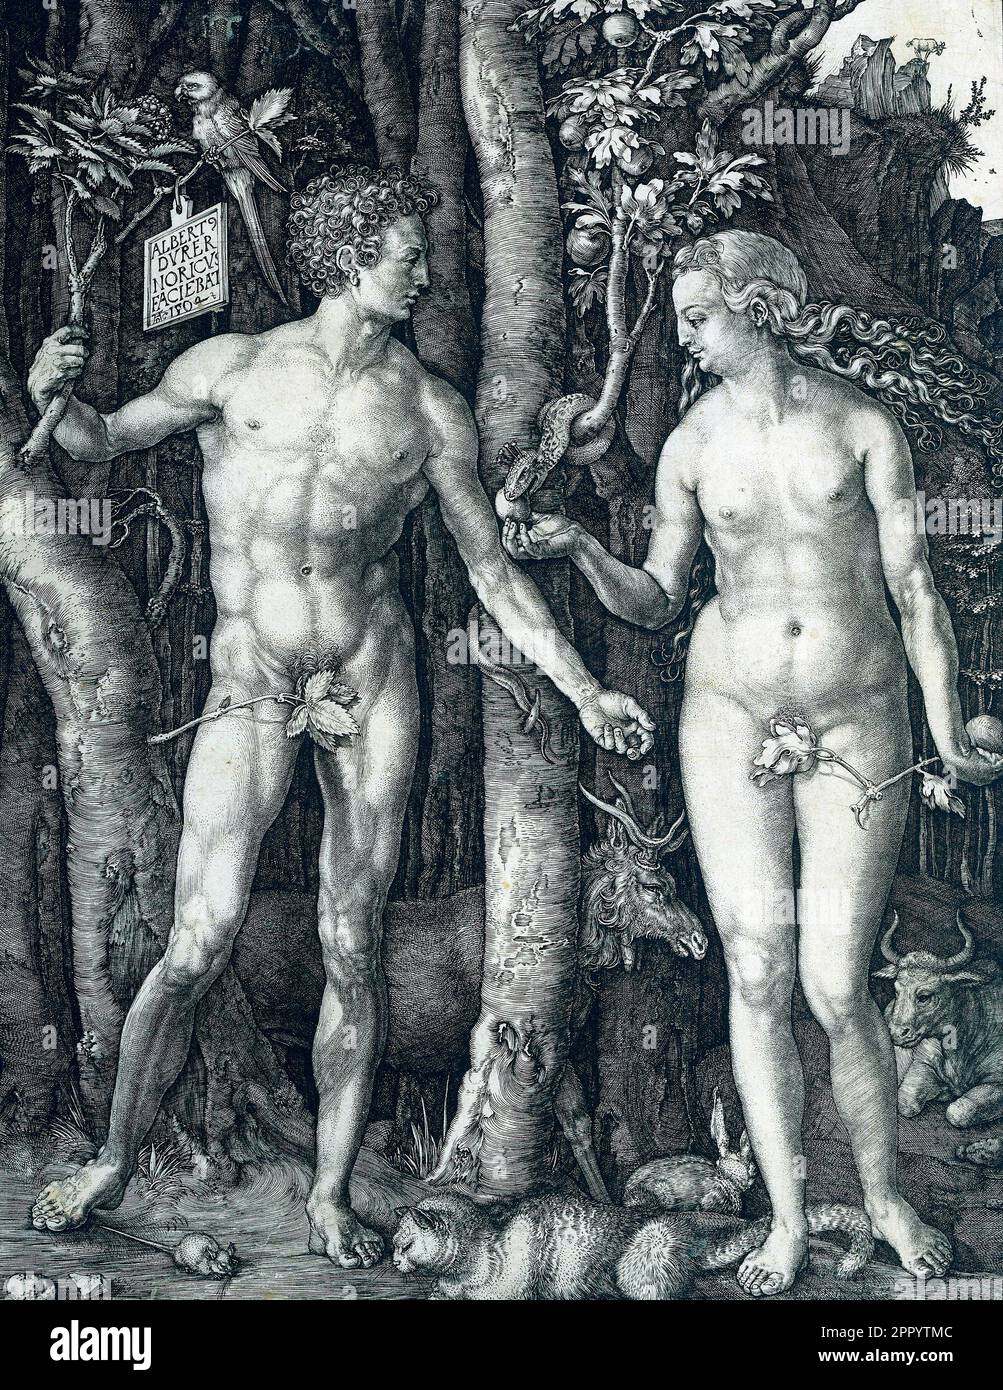 Adán y Eva por Albrecht Dürer, 1504 Foto de stock